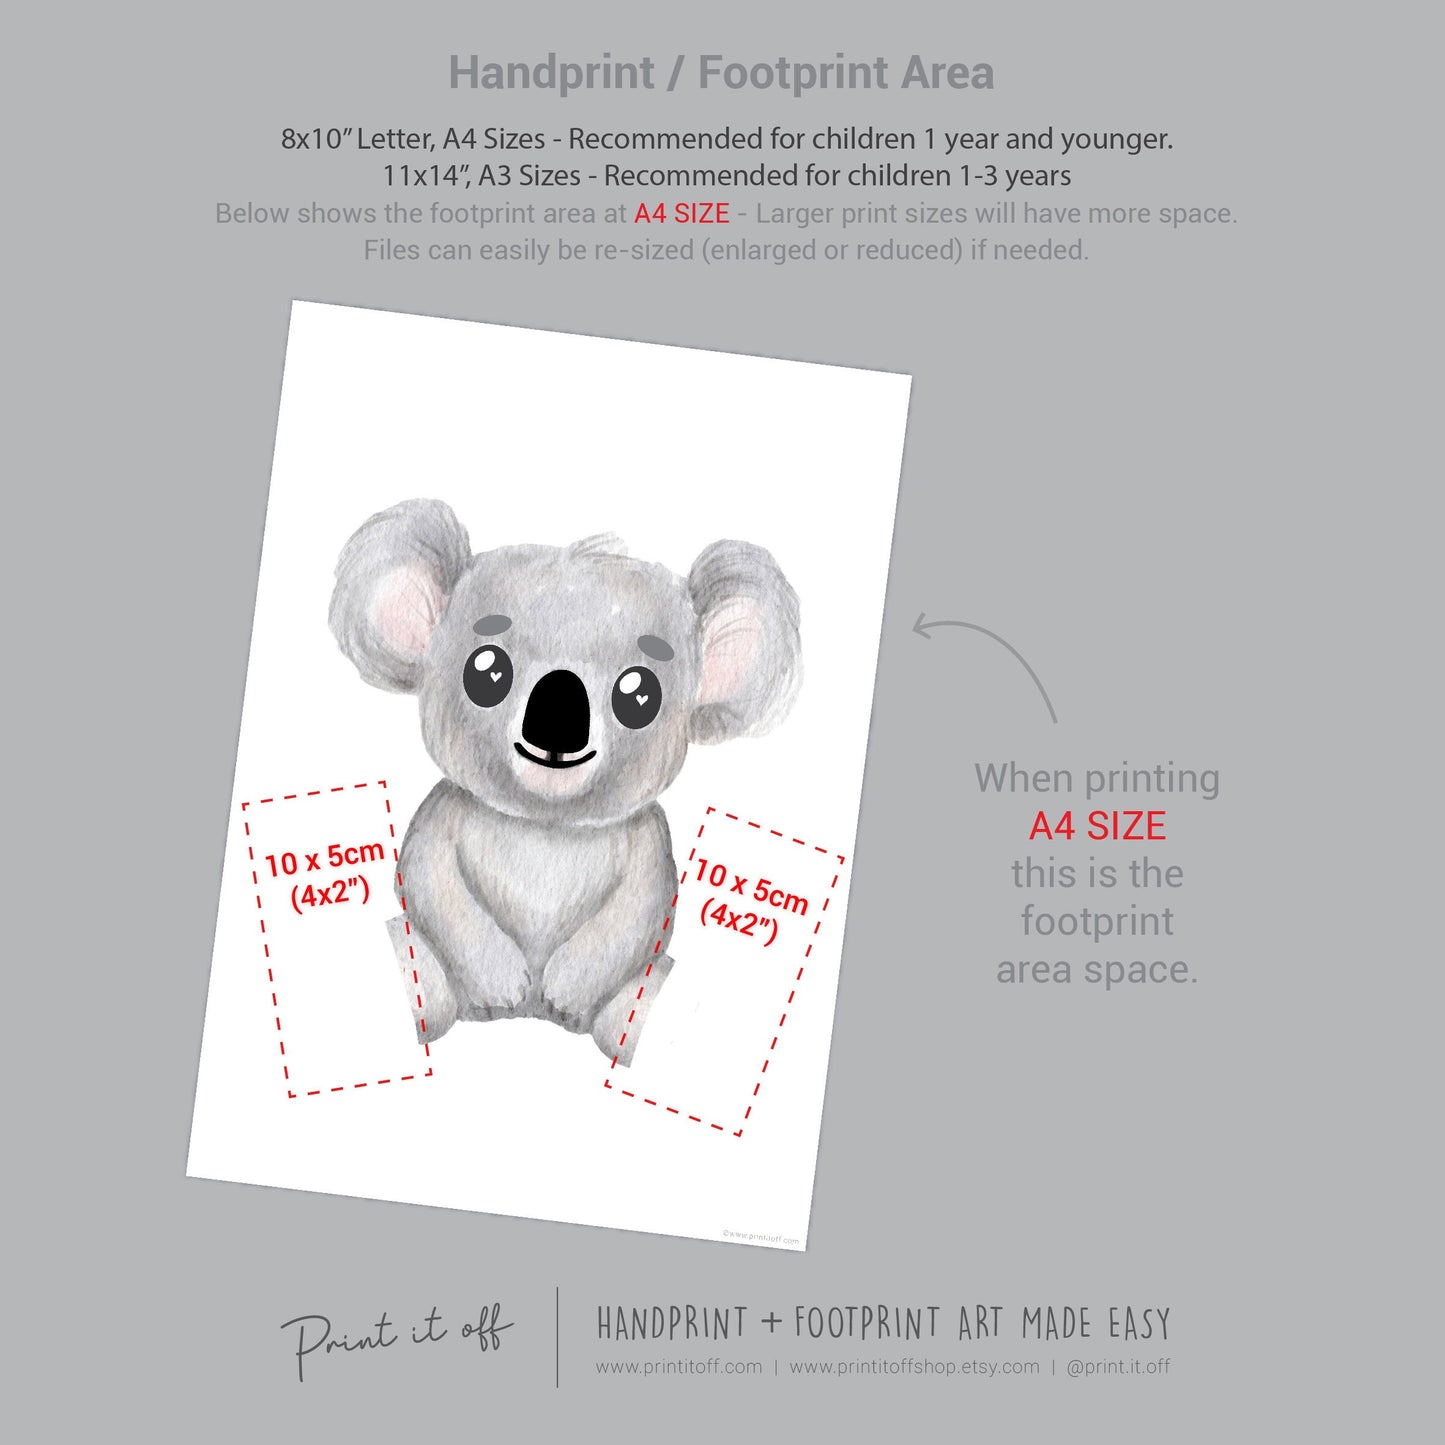 Baby Footprint Art Print / Koala Animal / DIY Gift Craft Keepsake Memory Nursery Wall Decor / Newborn Toddler Foot / Print it Off